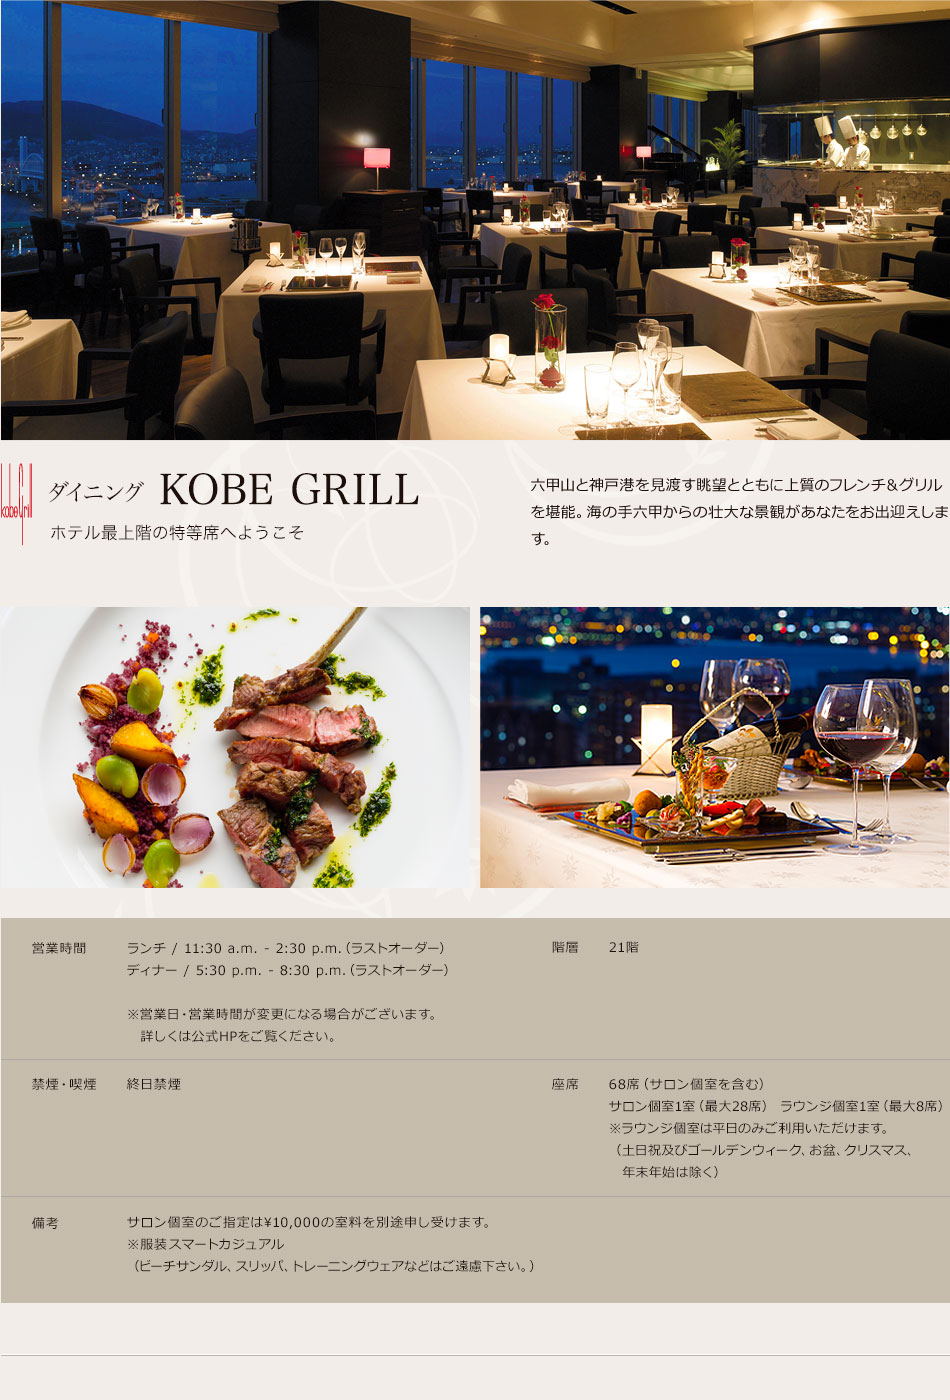 _CjO Kobe Grill